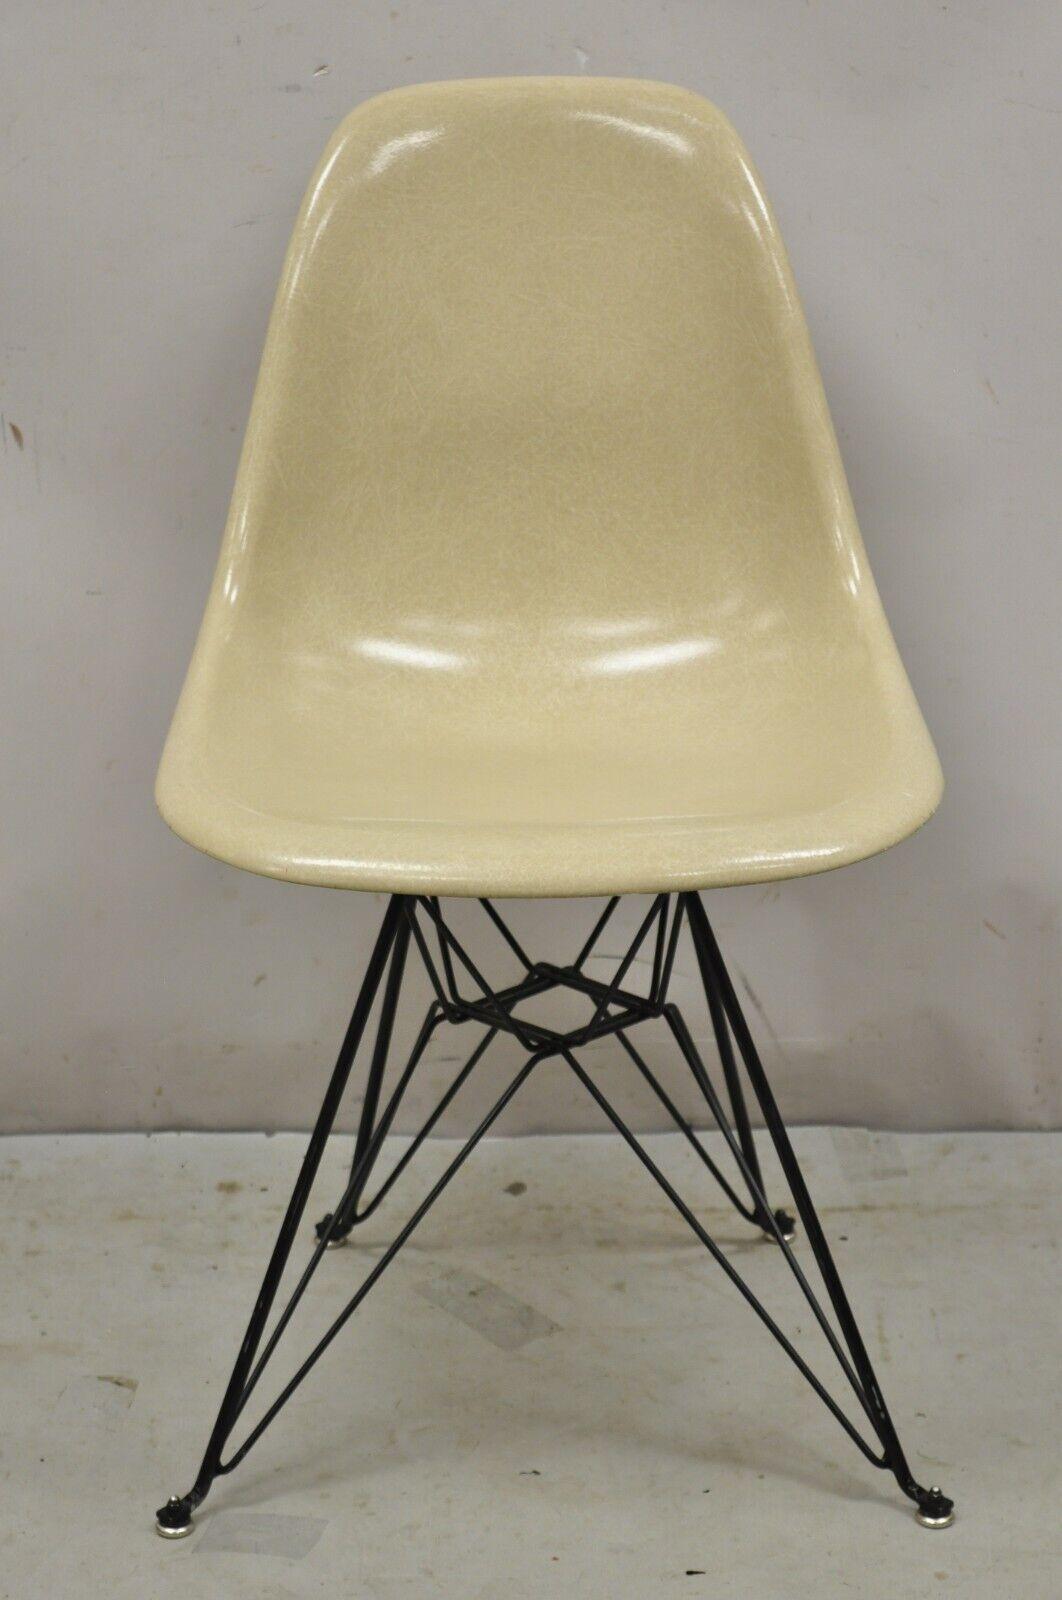 Modernica Case Study Oatmeal Fiberglass Side Chair with Black Metal Base (B). Item features black metal 